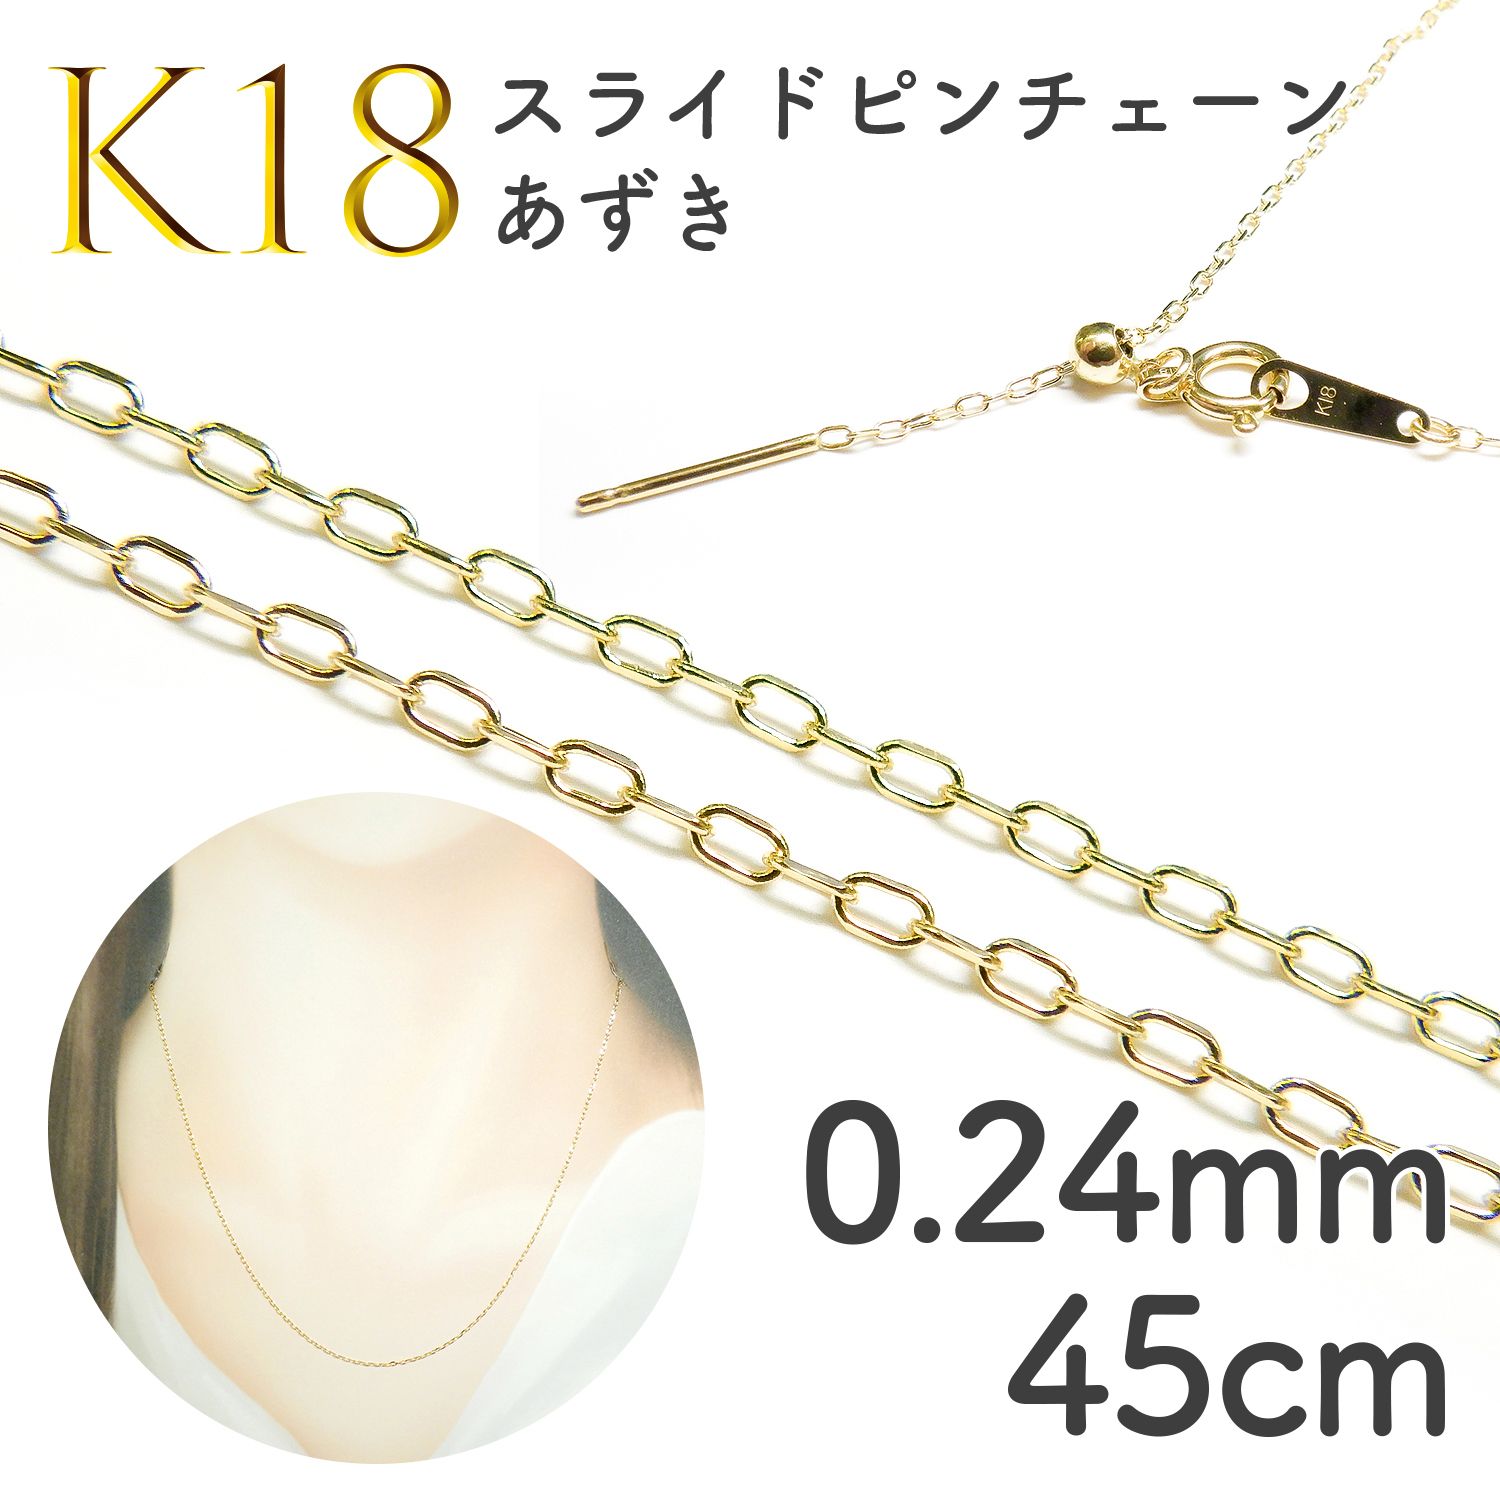 K18スライドピンチェーン あずき[014]0.24mm 45cm | TOP STONE 